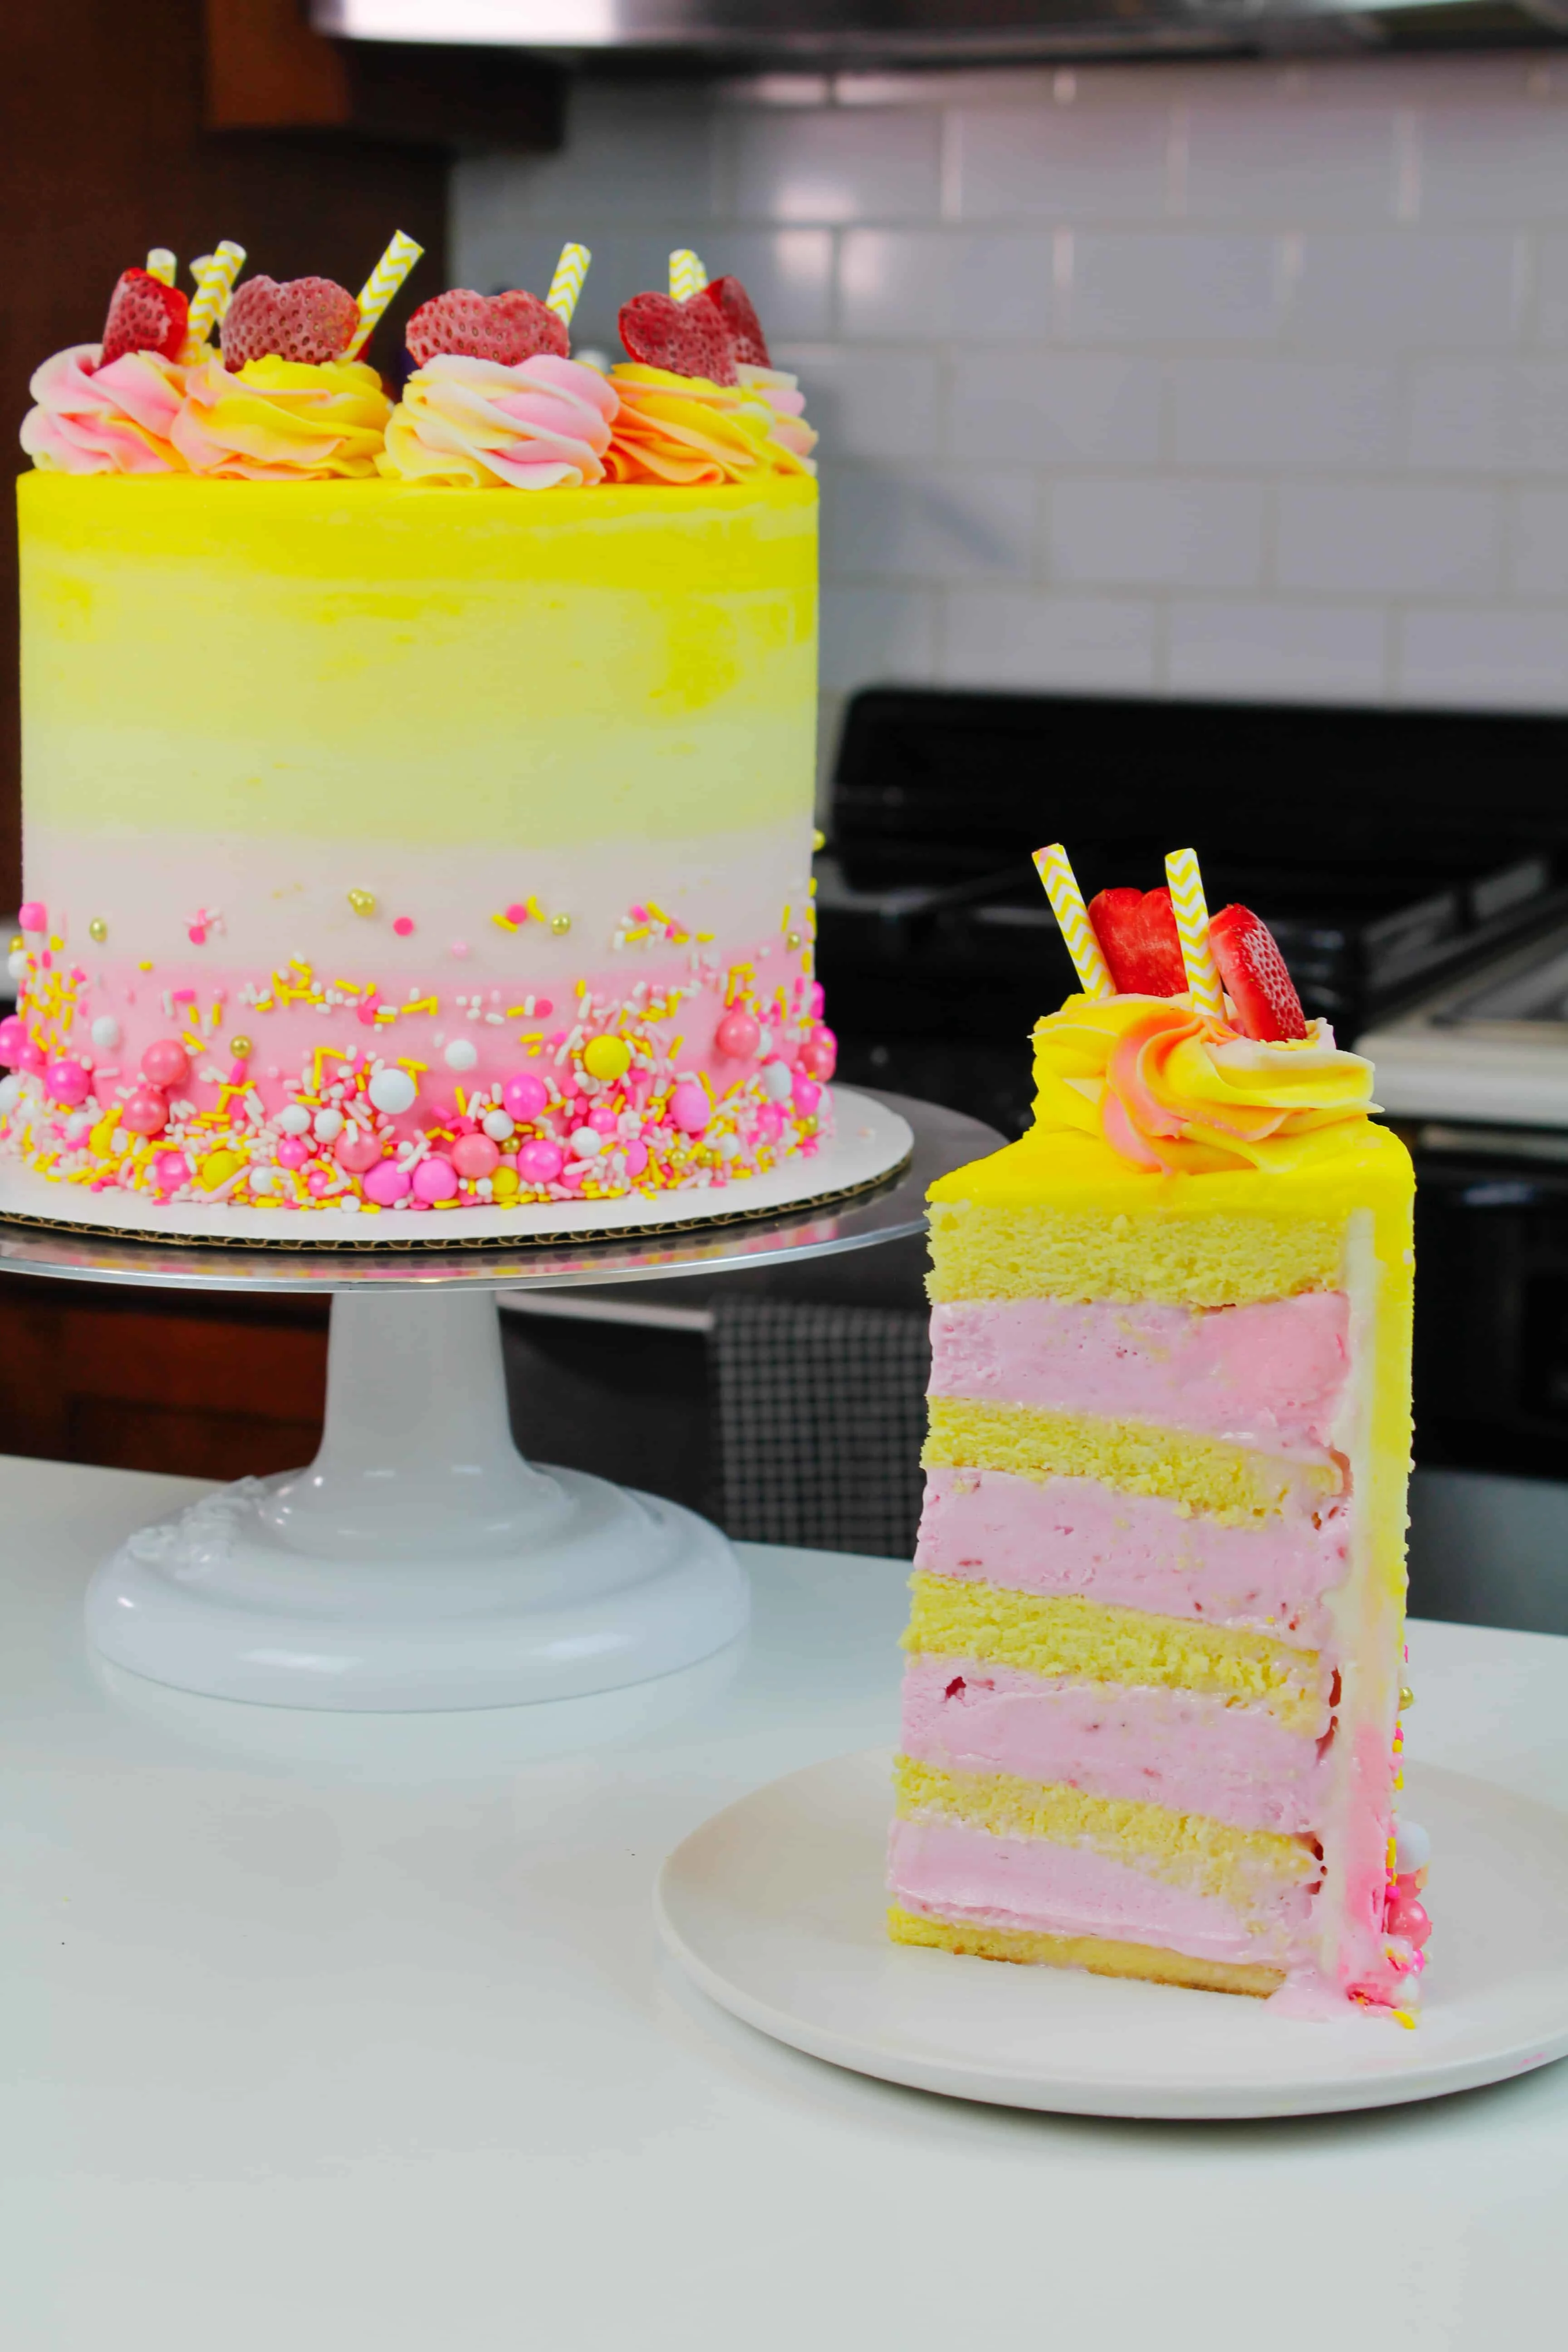 pink lemonade ice cream cake sliced